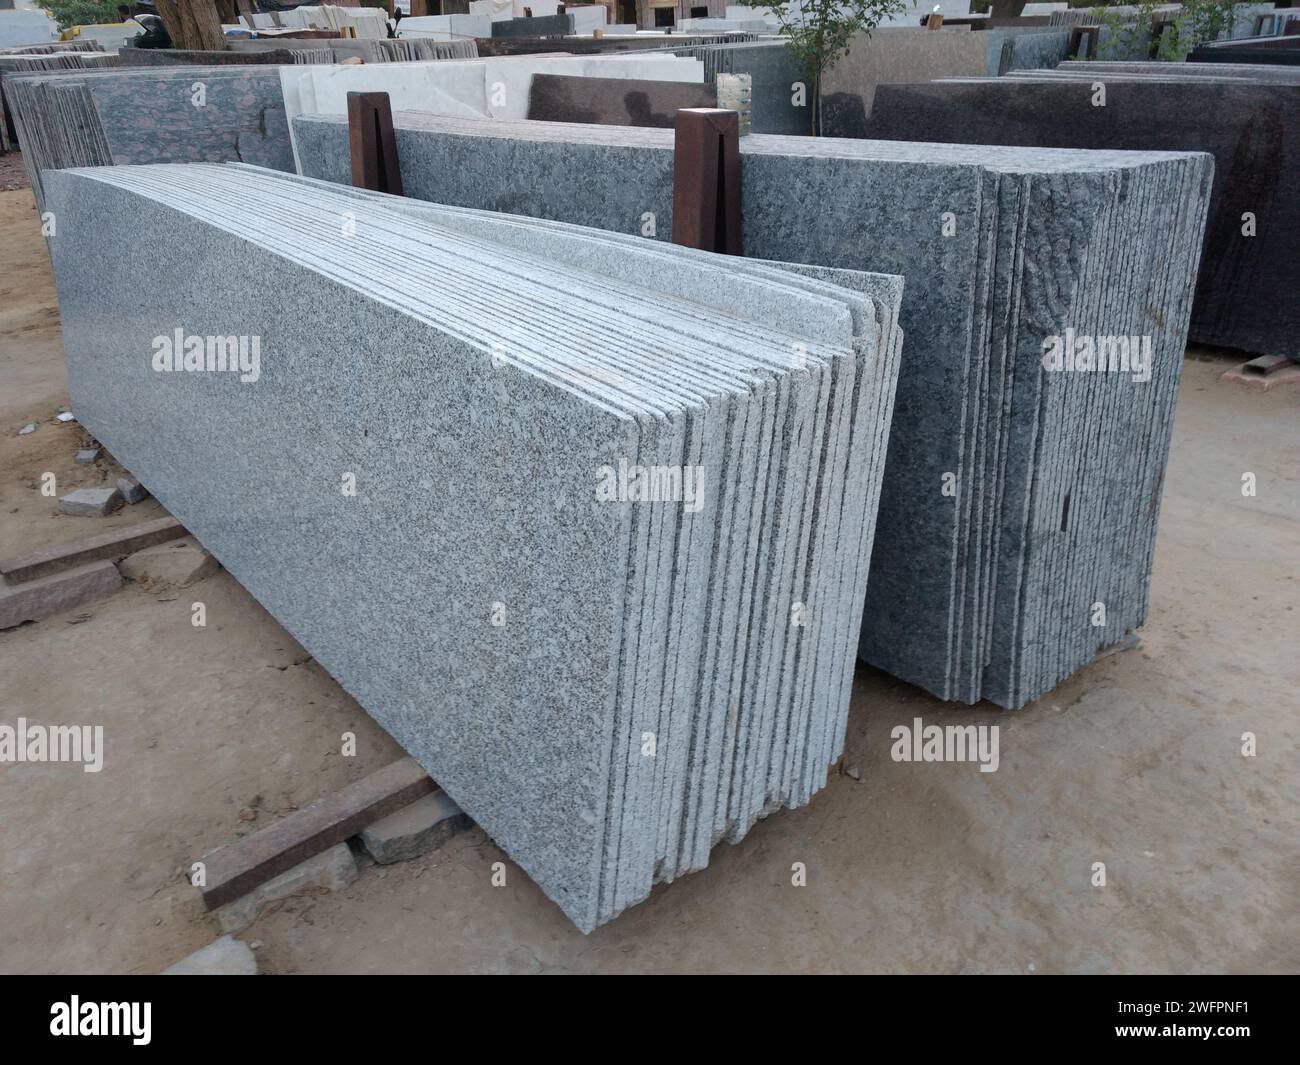 A stack of granite blocks in a yard Stock Photo